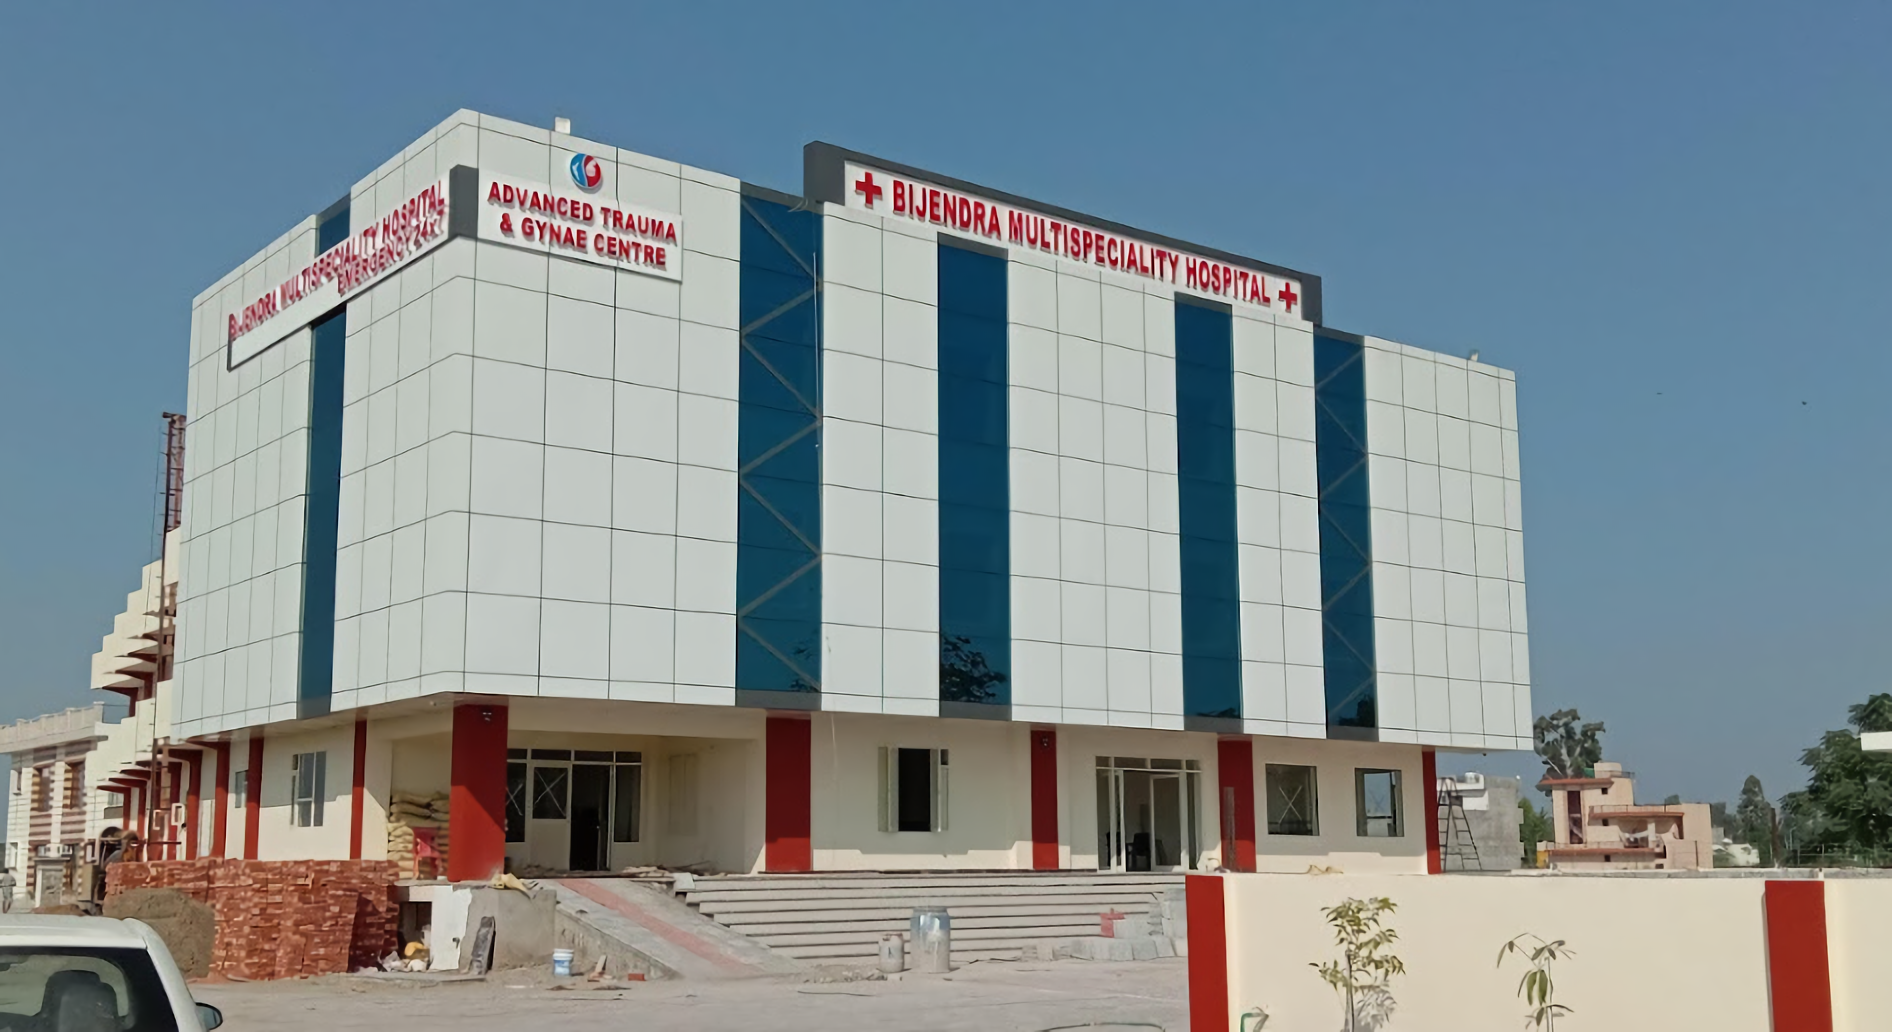 Bijendra Multispeciality Hospital